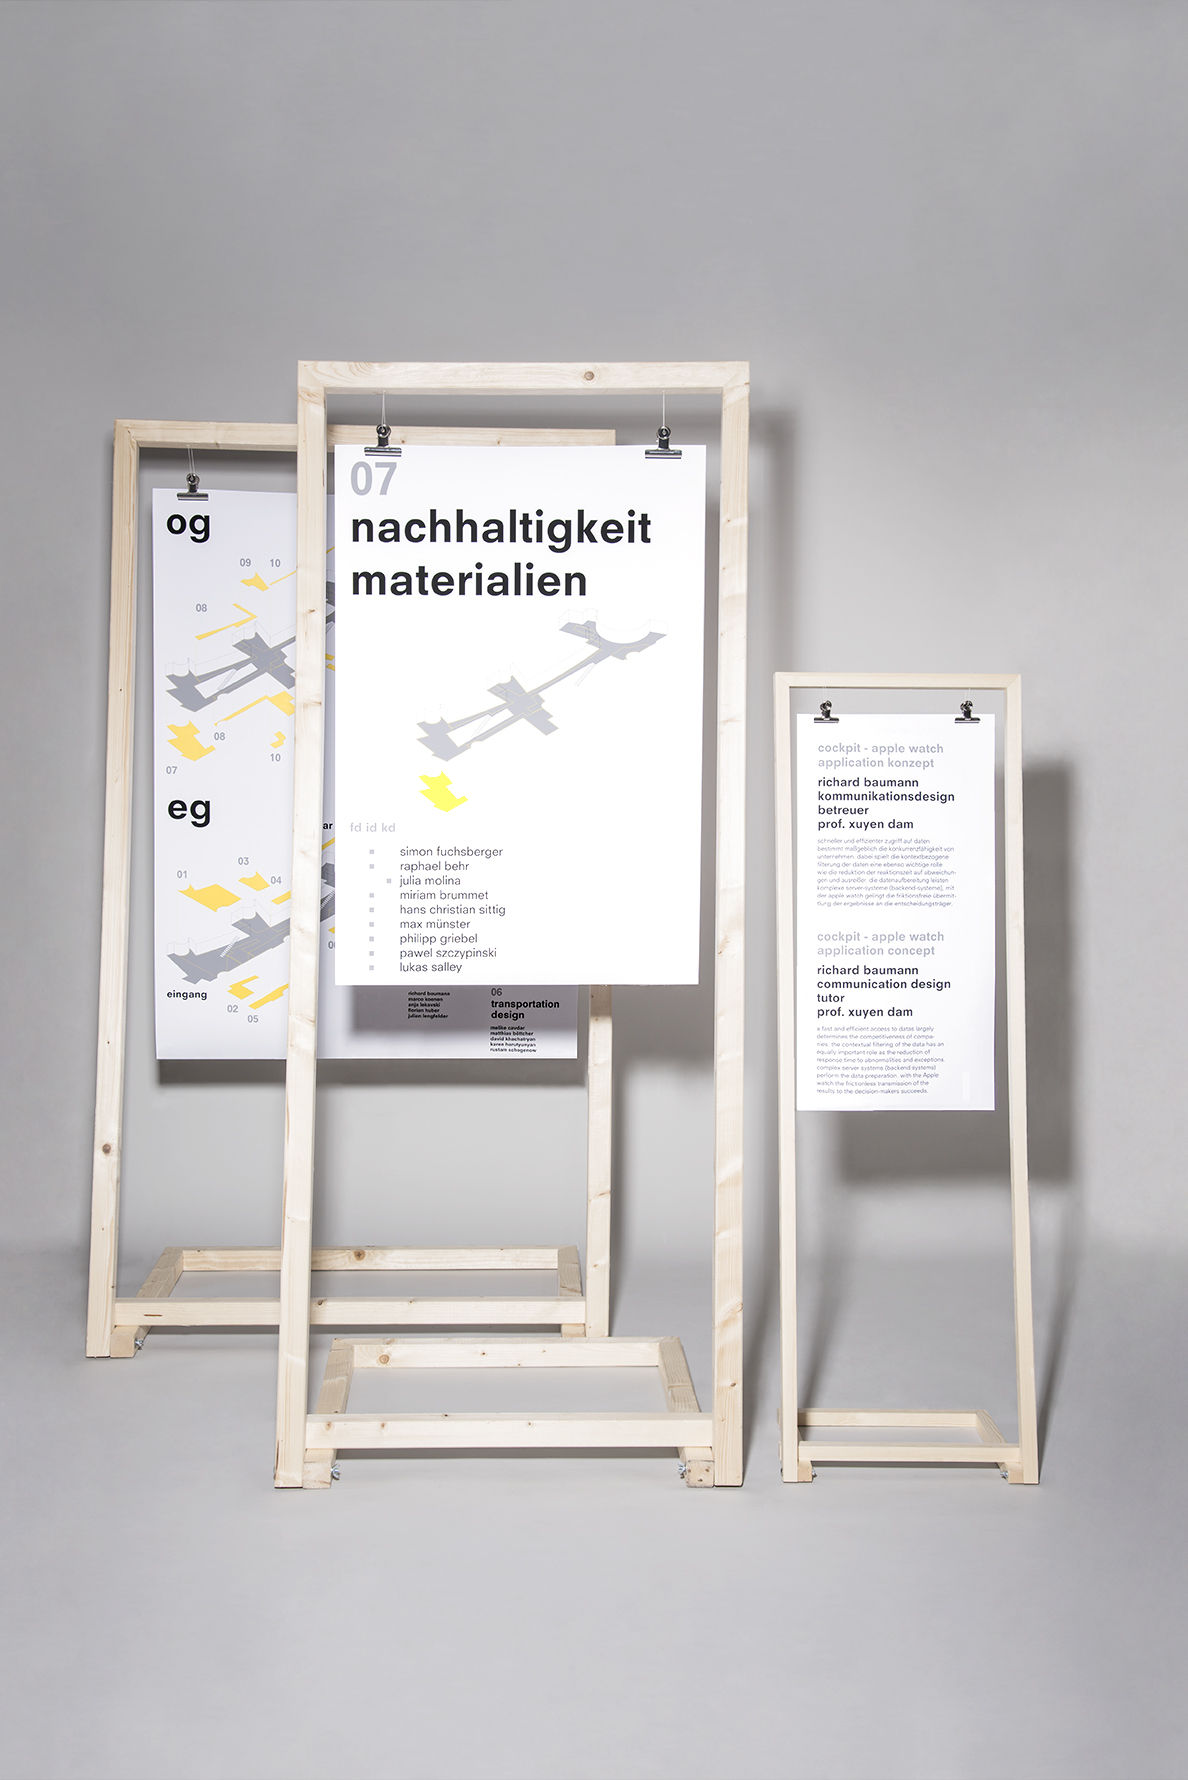 RUSCHA VOORMANN Annual Exhibition 2015 // Faculty of Design Munich